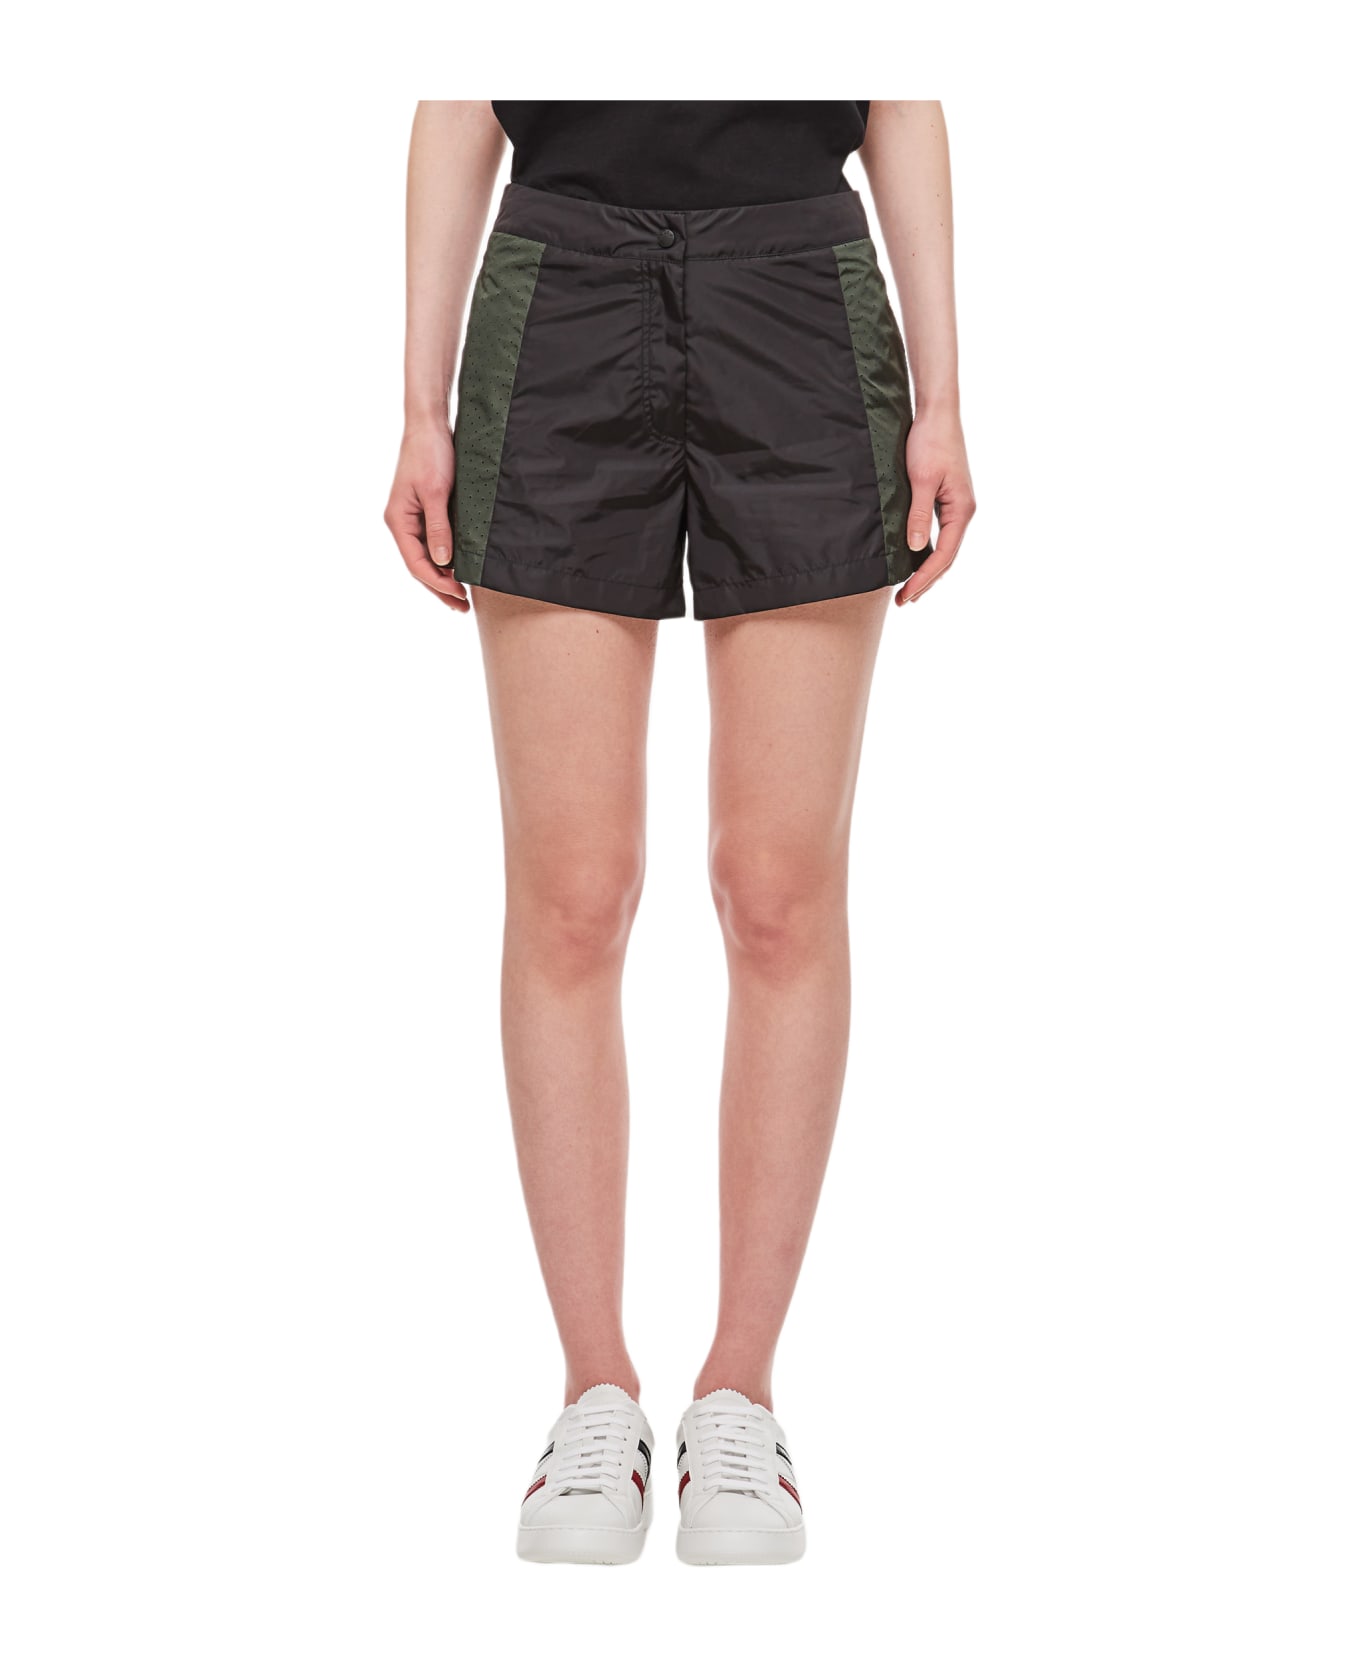 Moncler Shorts - Black